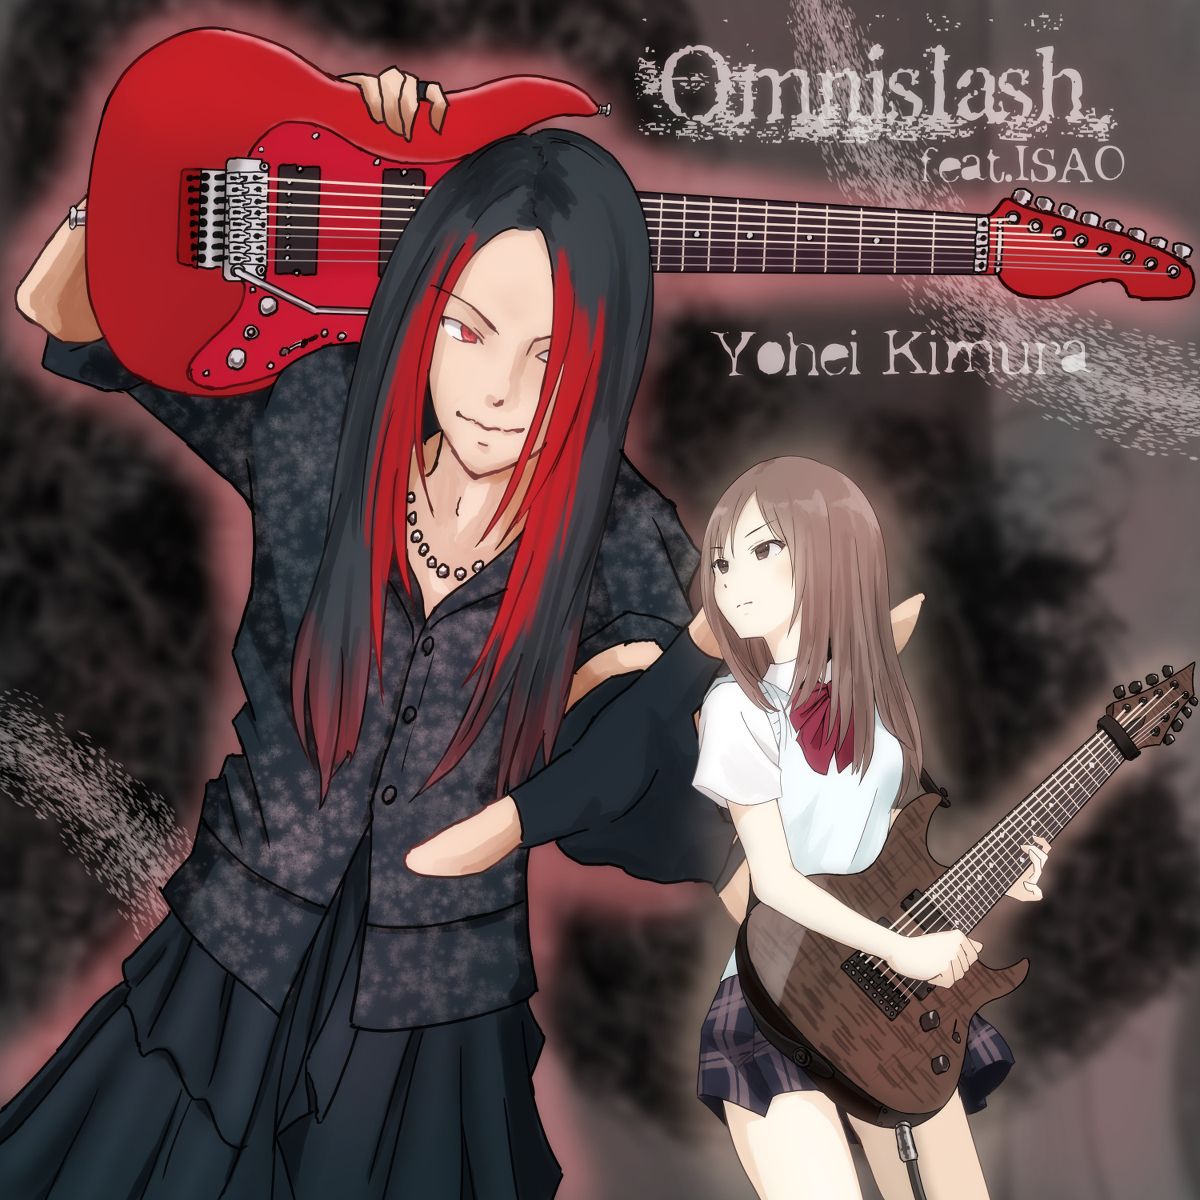 Yohei Kimura Omnislash Feat Isao Artwork Isao ギター T Co 2fajwf35mi T Co Mieblsj2fo Twitter